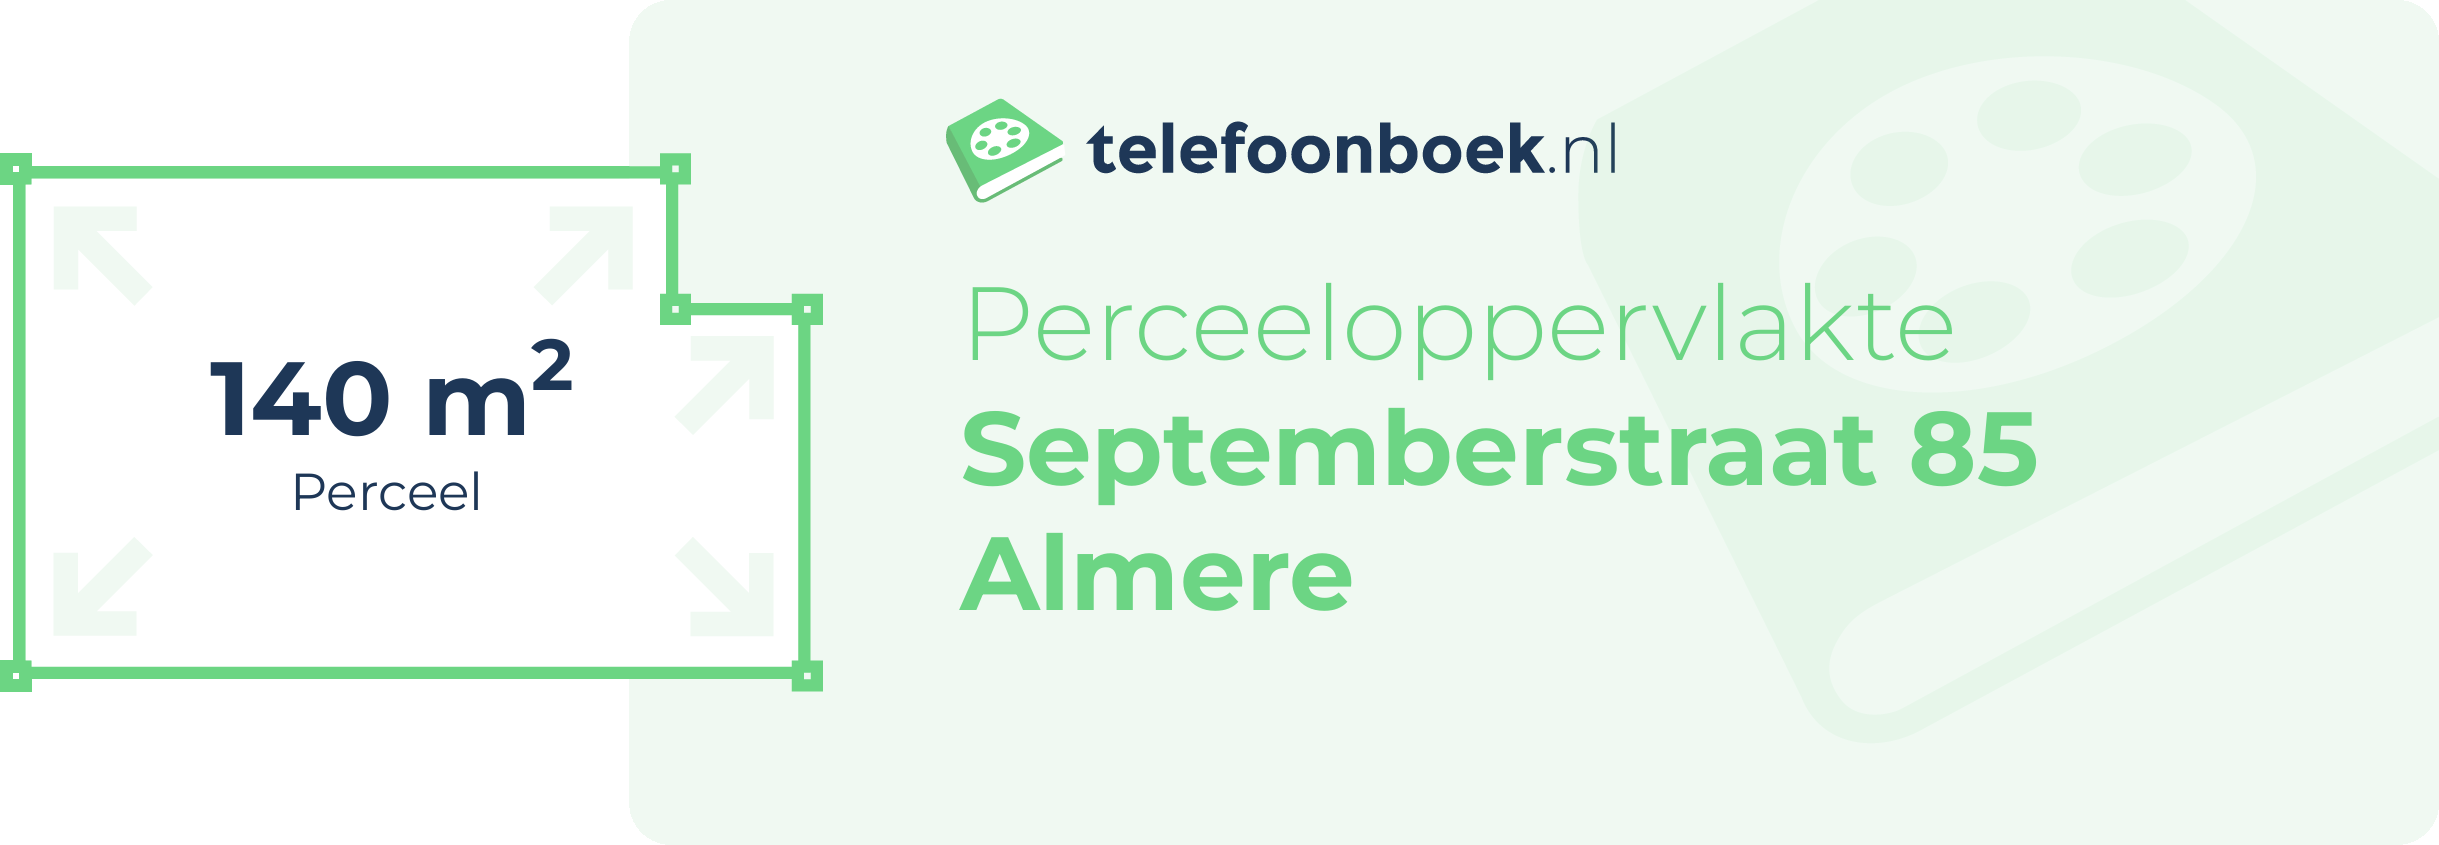 Perceeloppervlakte Septemberstraat 85 Almere